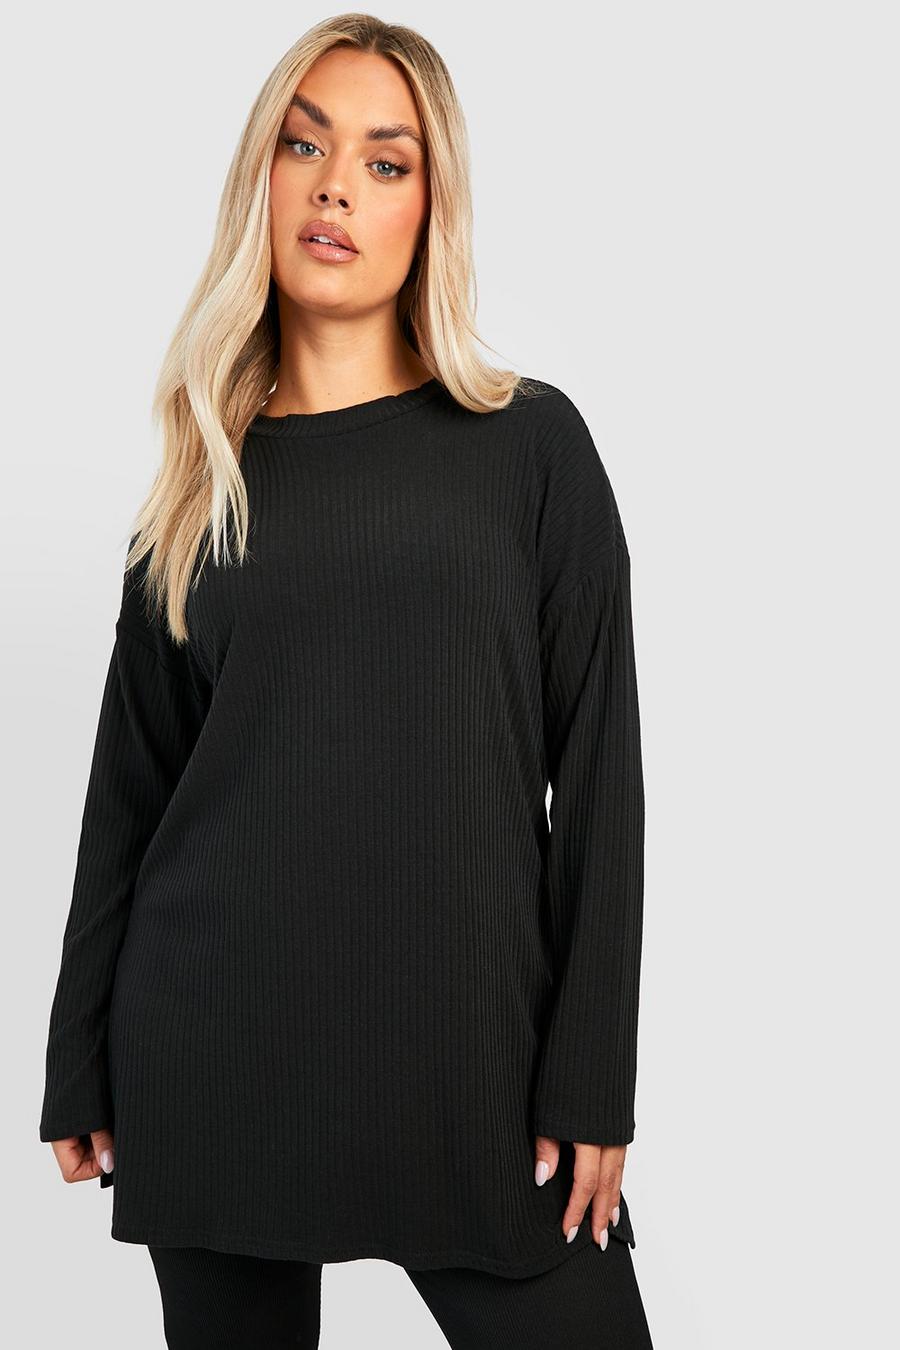 Women's Black Plus Soft Rib Long Sleeve Tunic Top